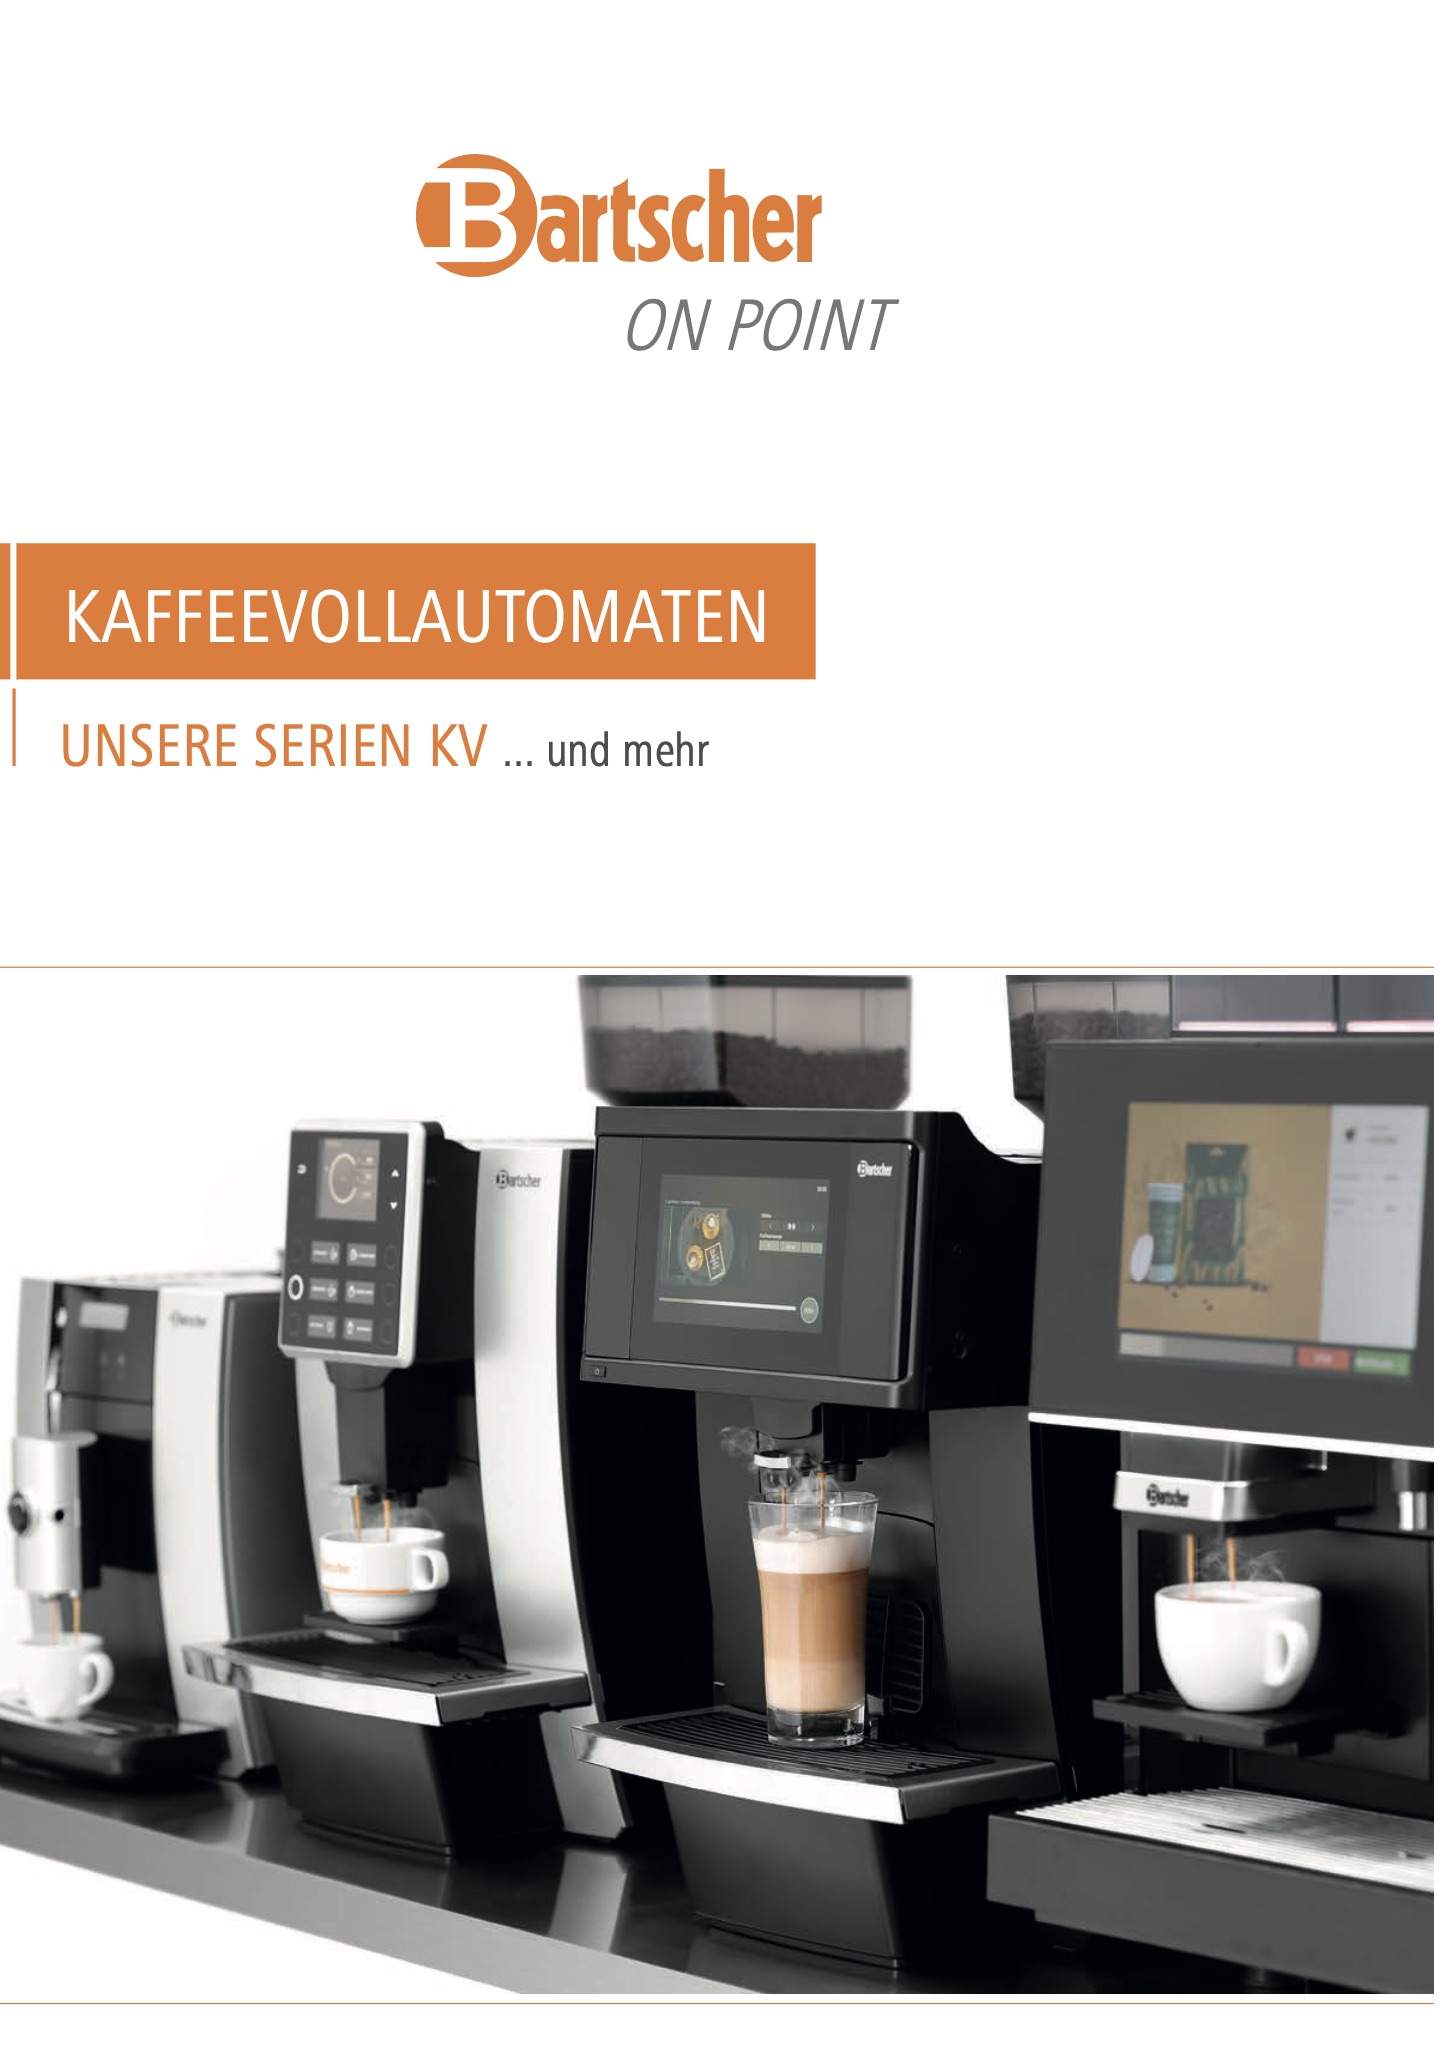 Bartscher Kaffeevollautomaten Prospekt PDF